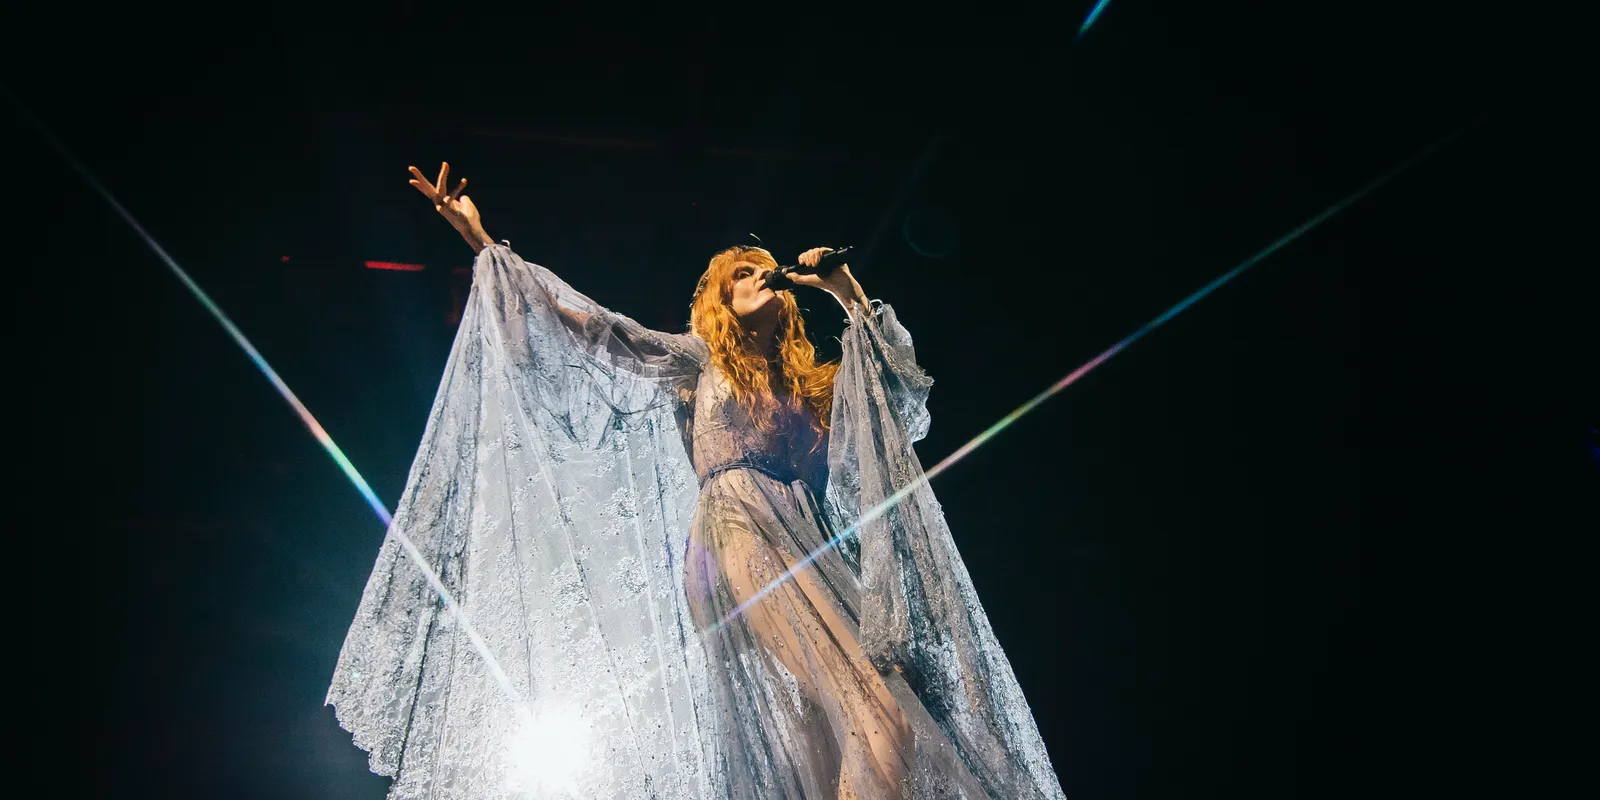 Escucha el cover que hizo Florence and the Machine a ‘Just A Girl’ de No Doubt